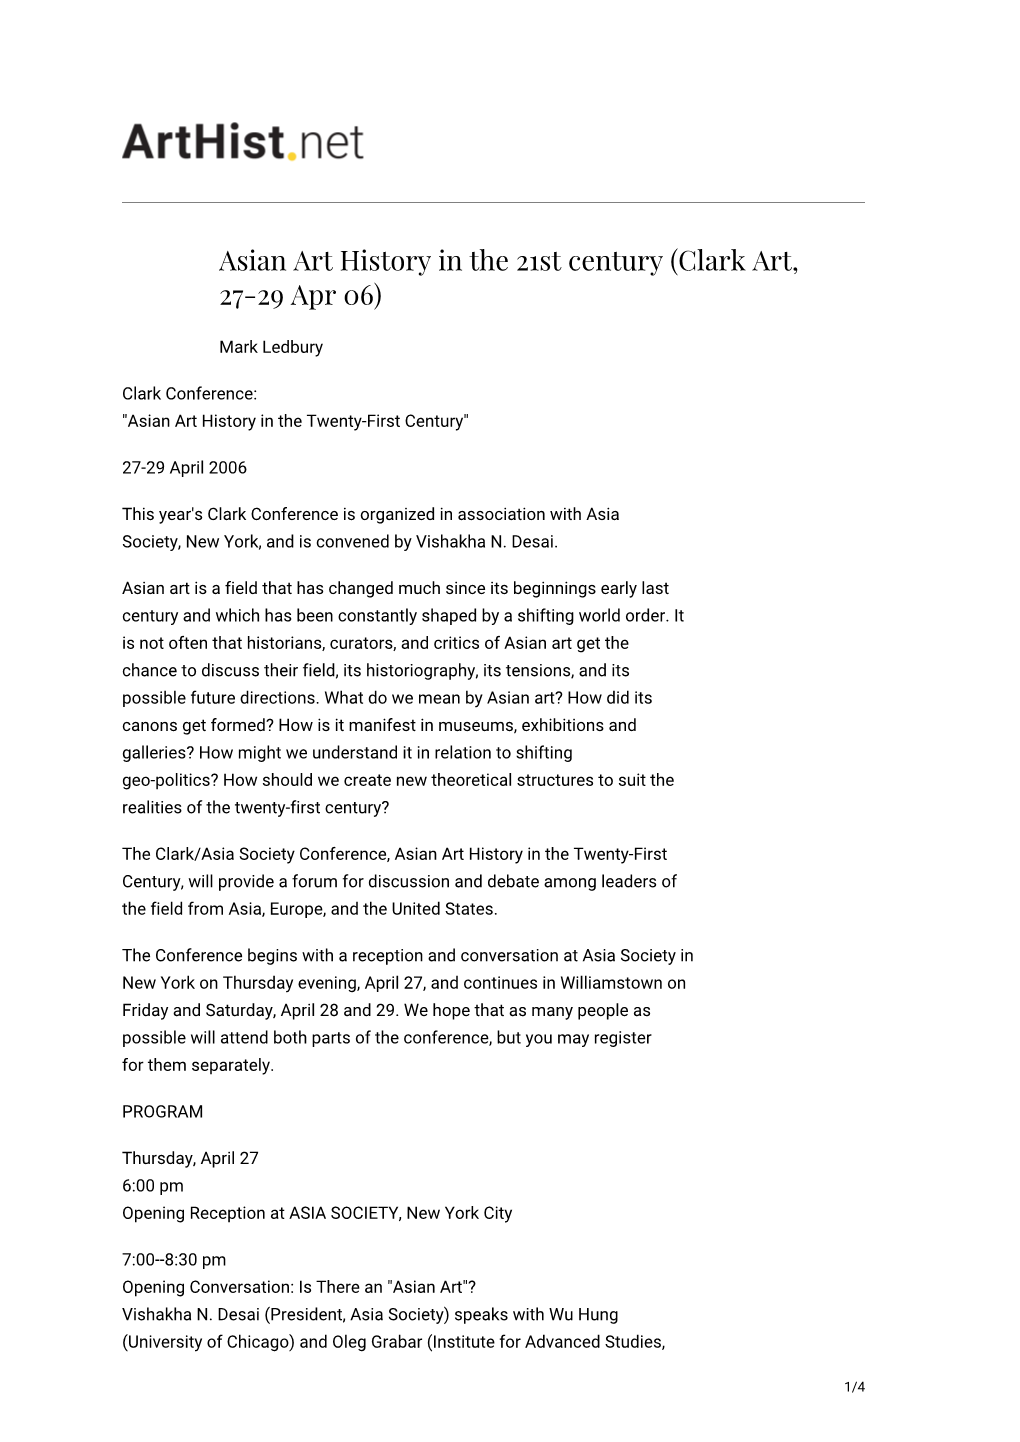 Asian Art History in the 21St Century (Clark Art, 27-29 Apr 06)